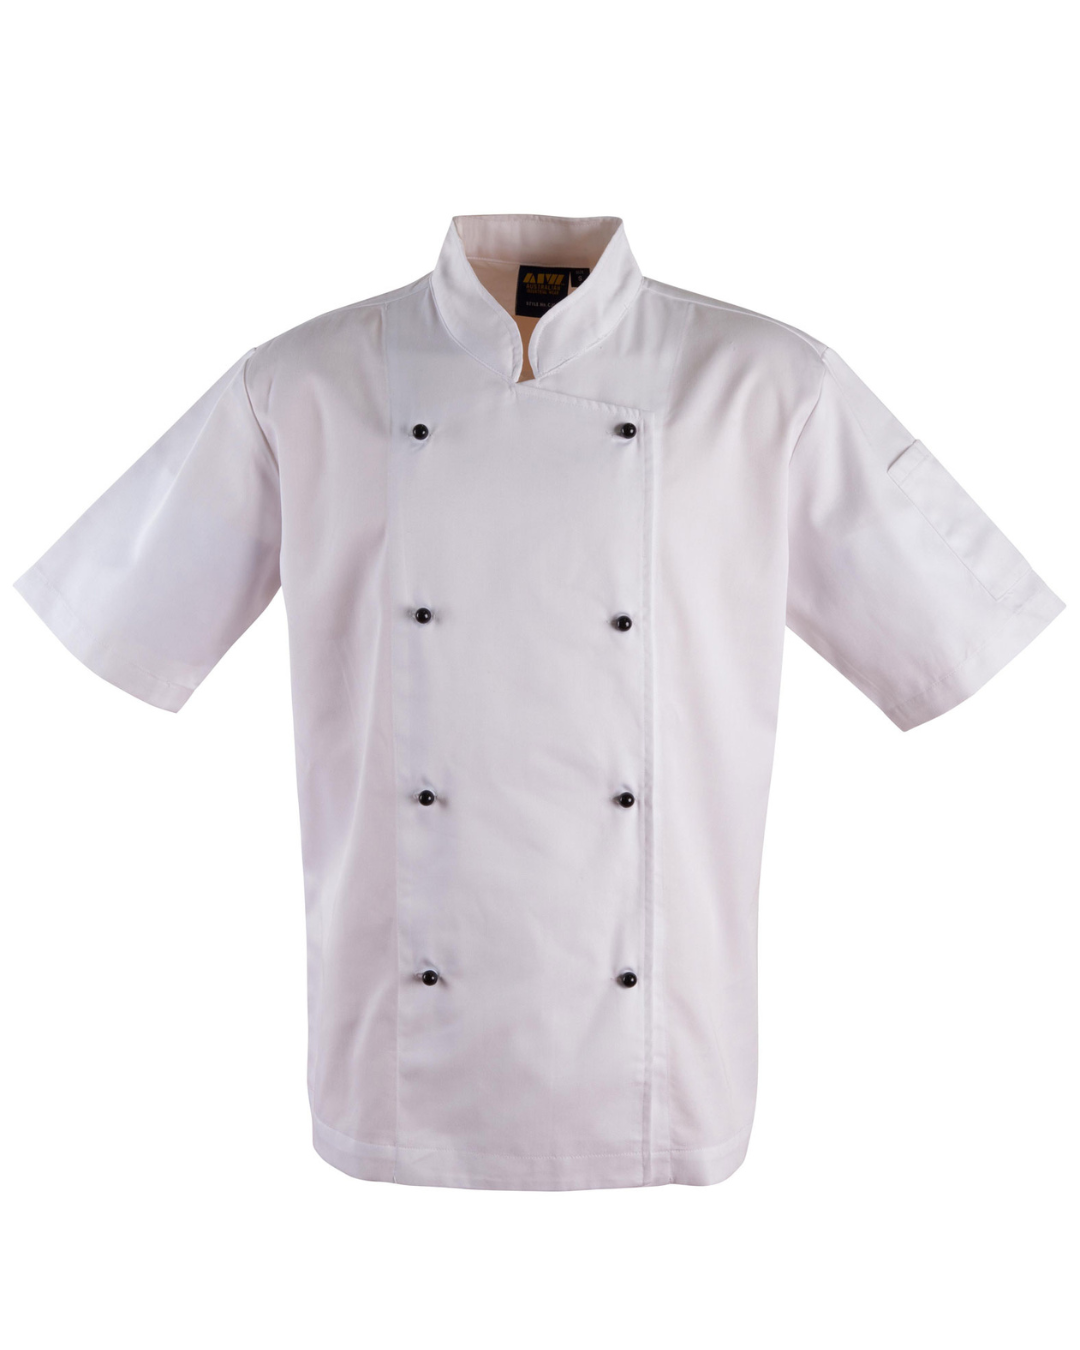 Chef's Short Sleeve Jacket (CJ02)